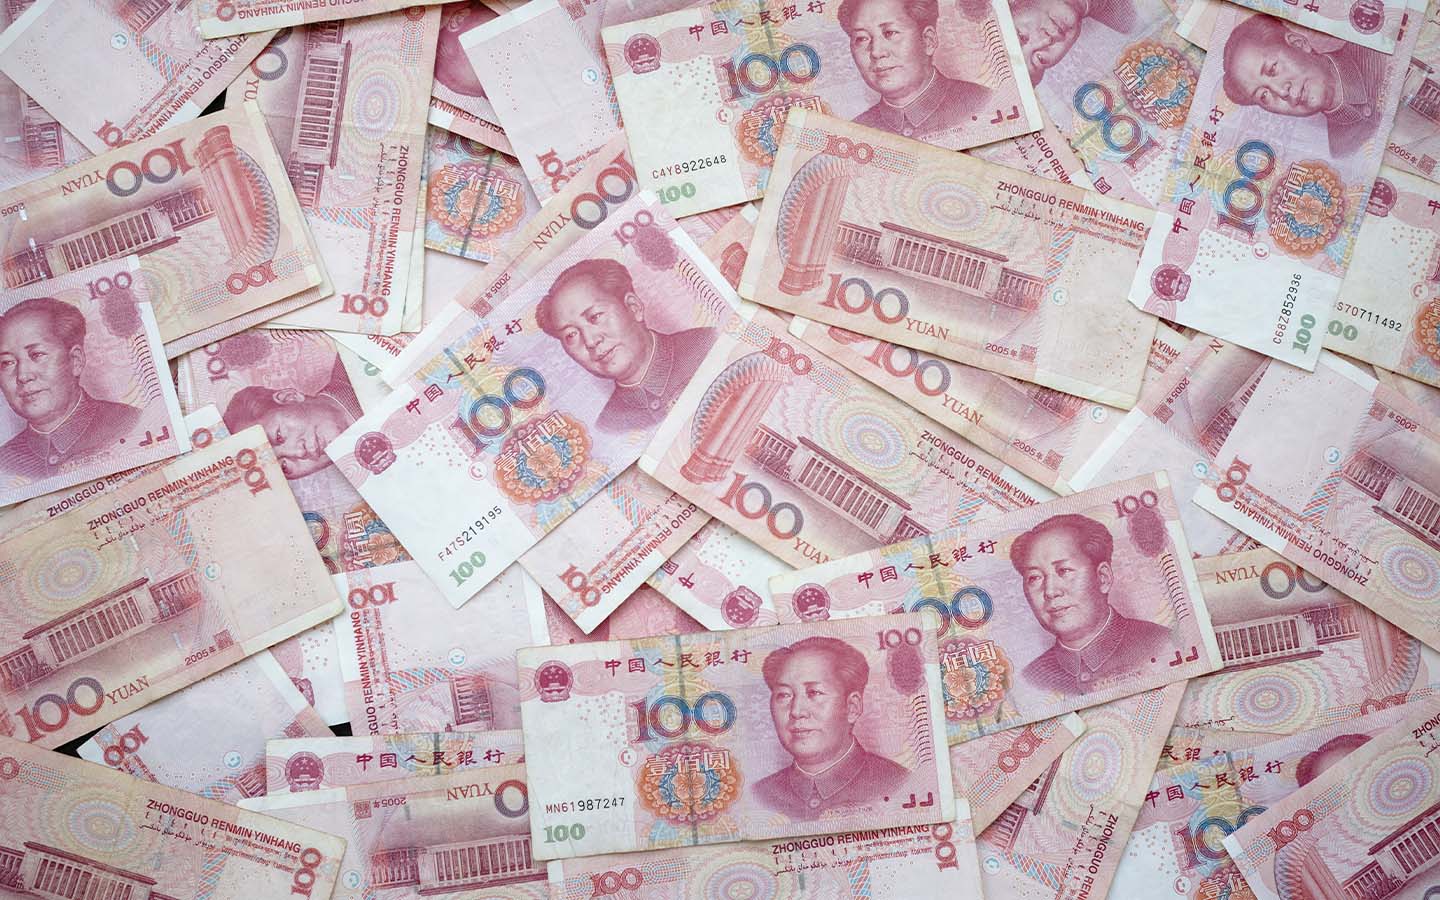 Beijing orders a crackdown on Macao’s illegal money exchanges